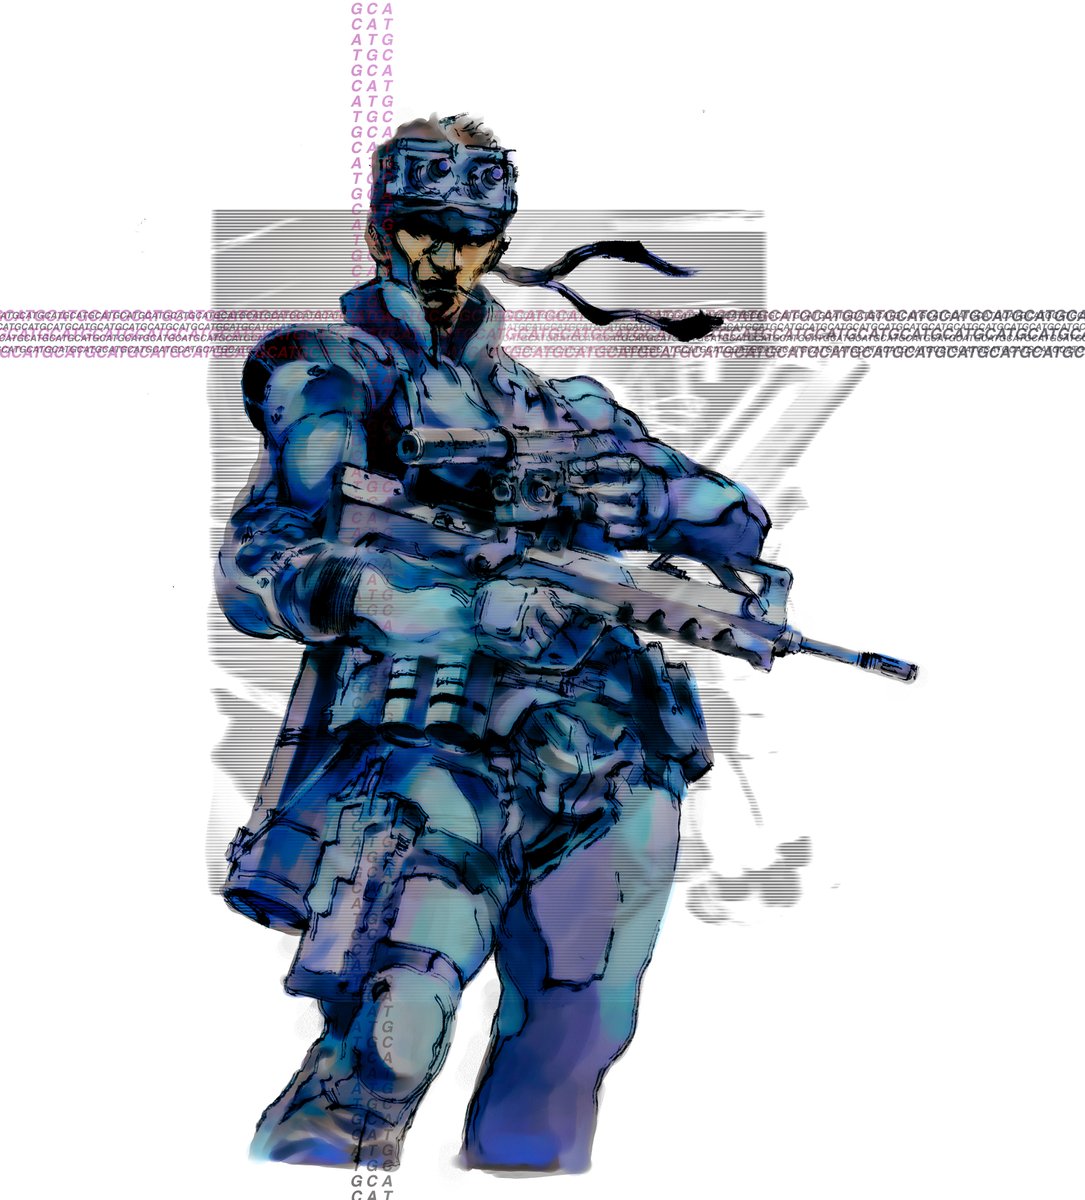 Metal Gear Solid / Solid Snake
Artist: Yoji Shinkawa